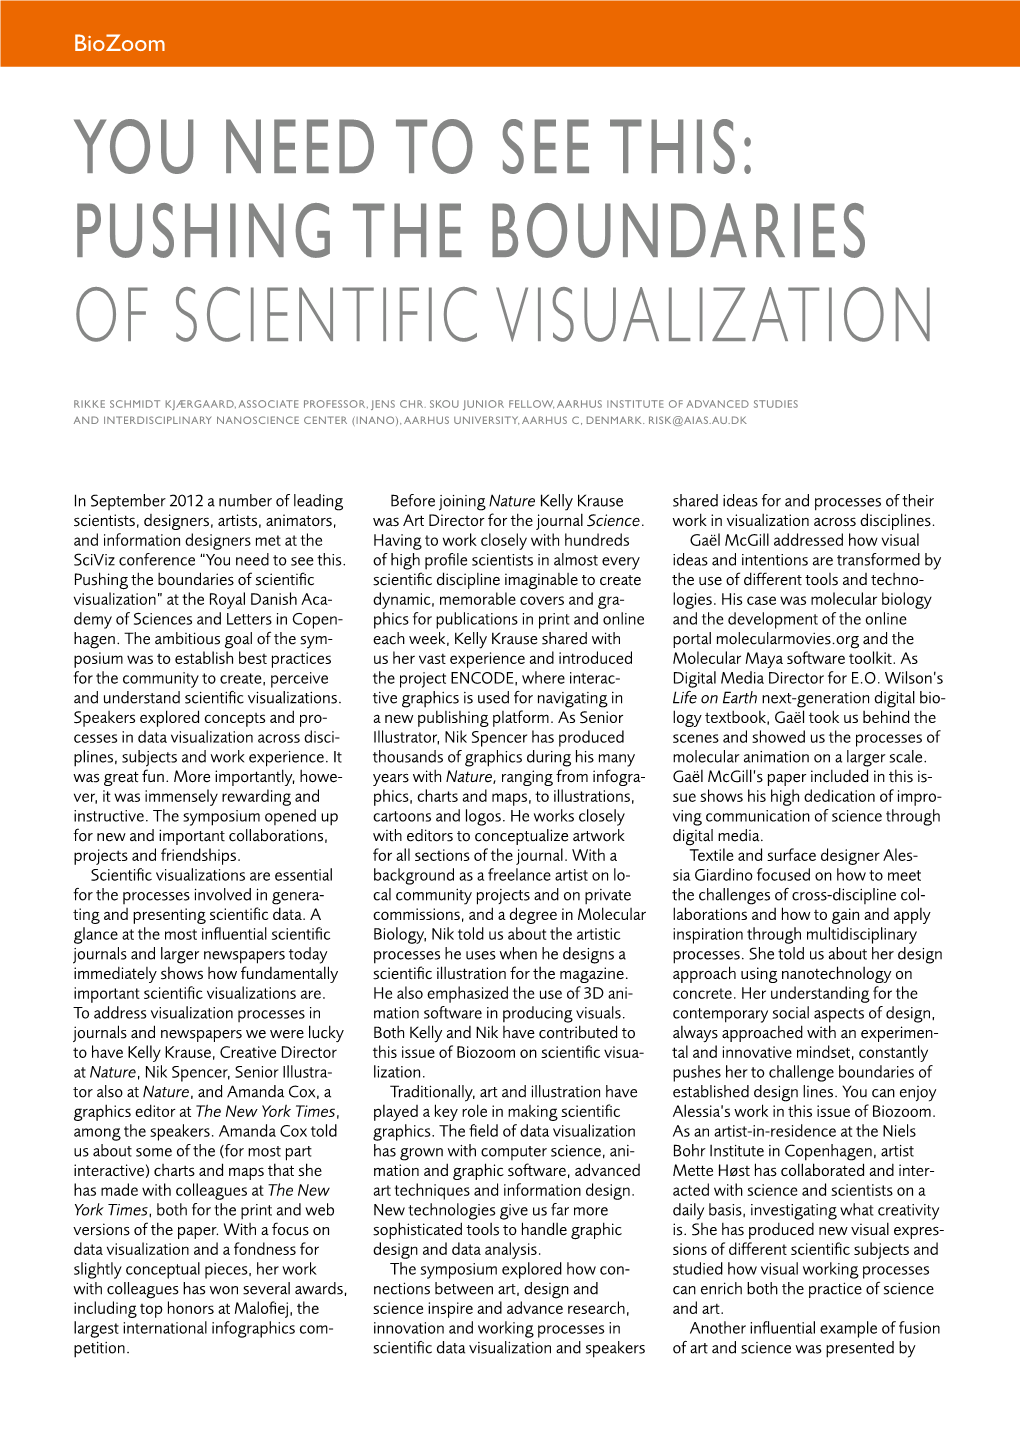 Pushing the Boundaries of Scientific Visualization